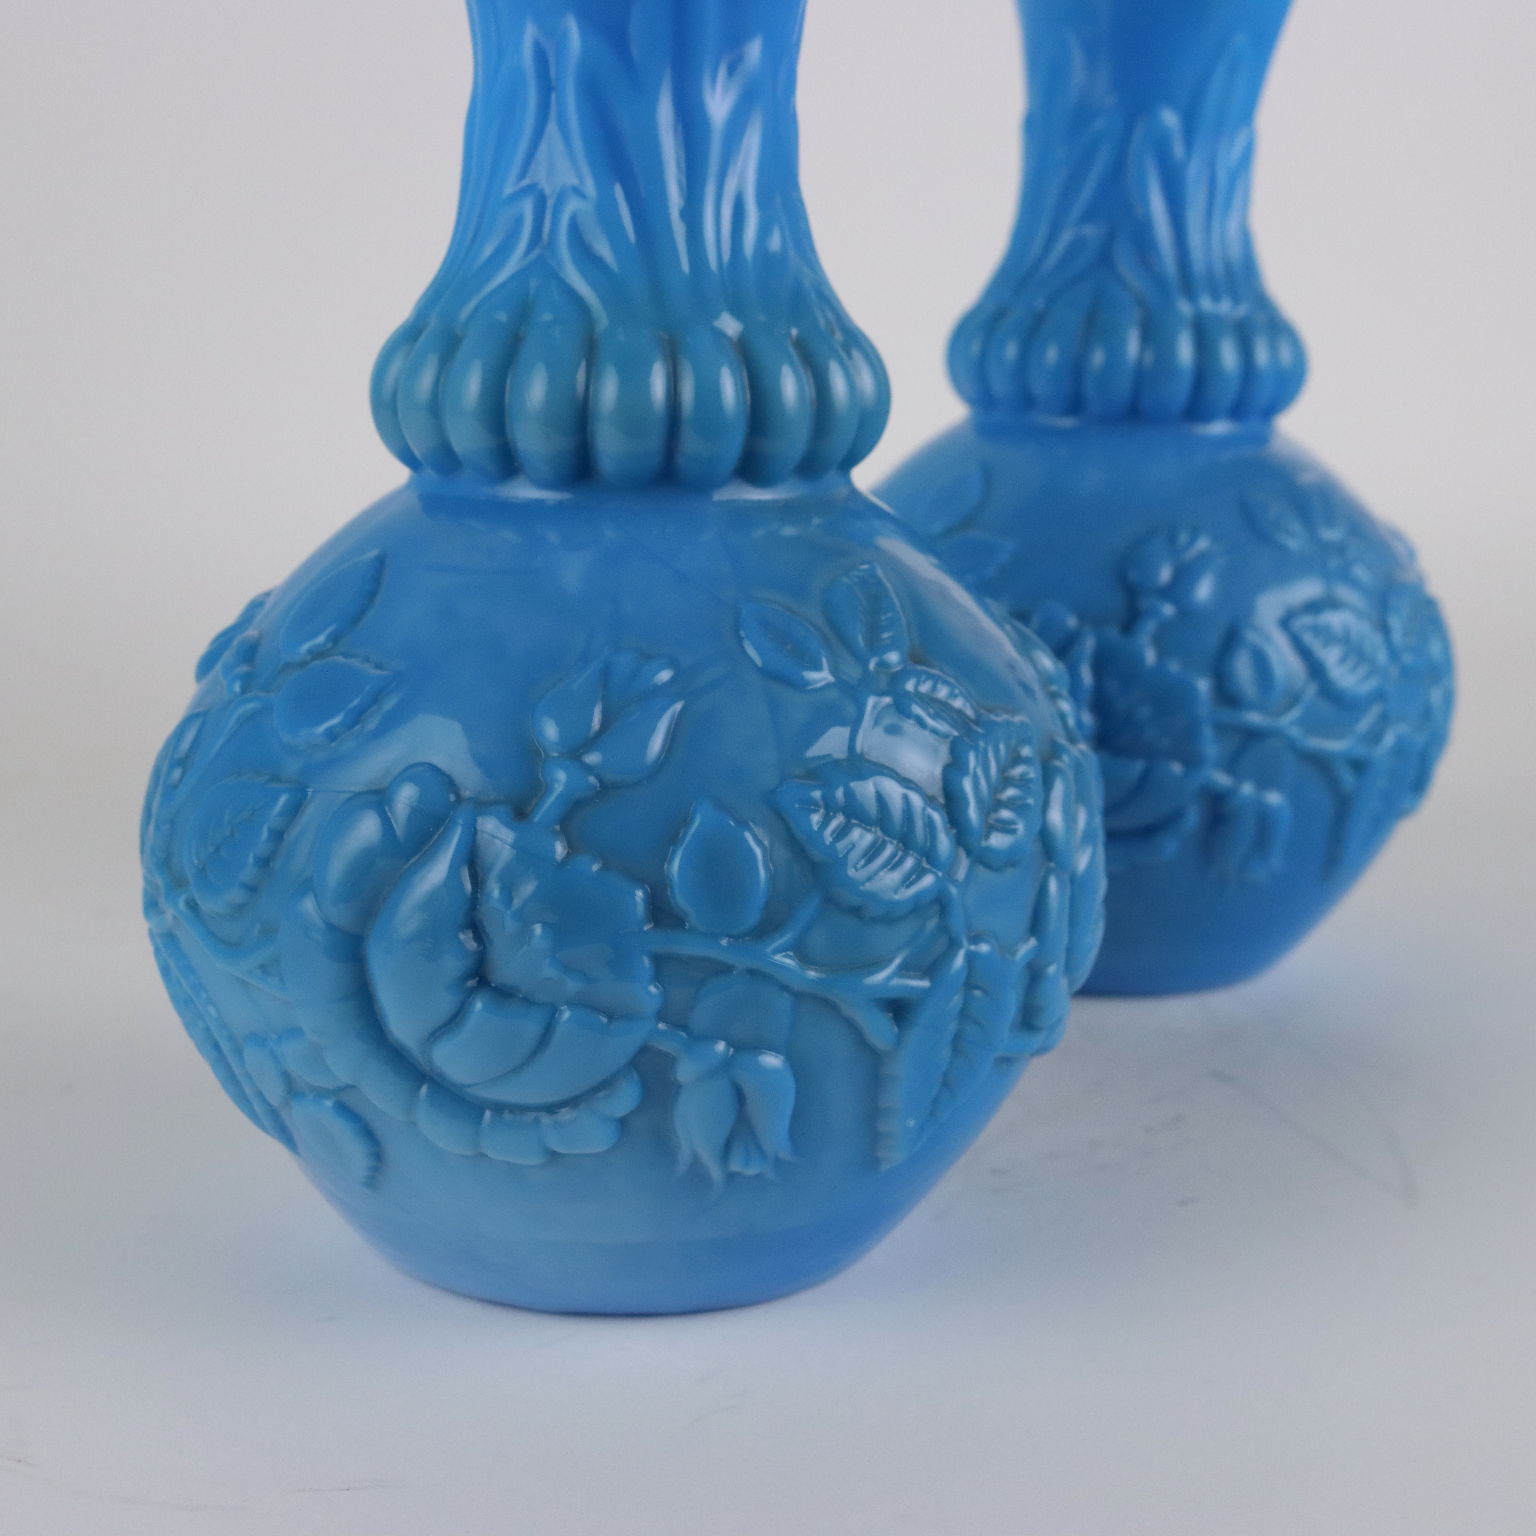 Pair of Antique Vases Light Blue Glass Europe XIX-XX Century